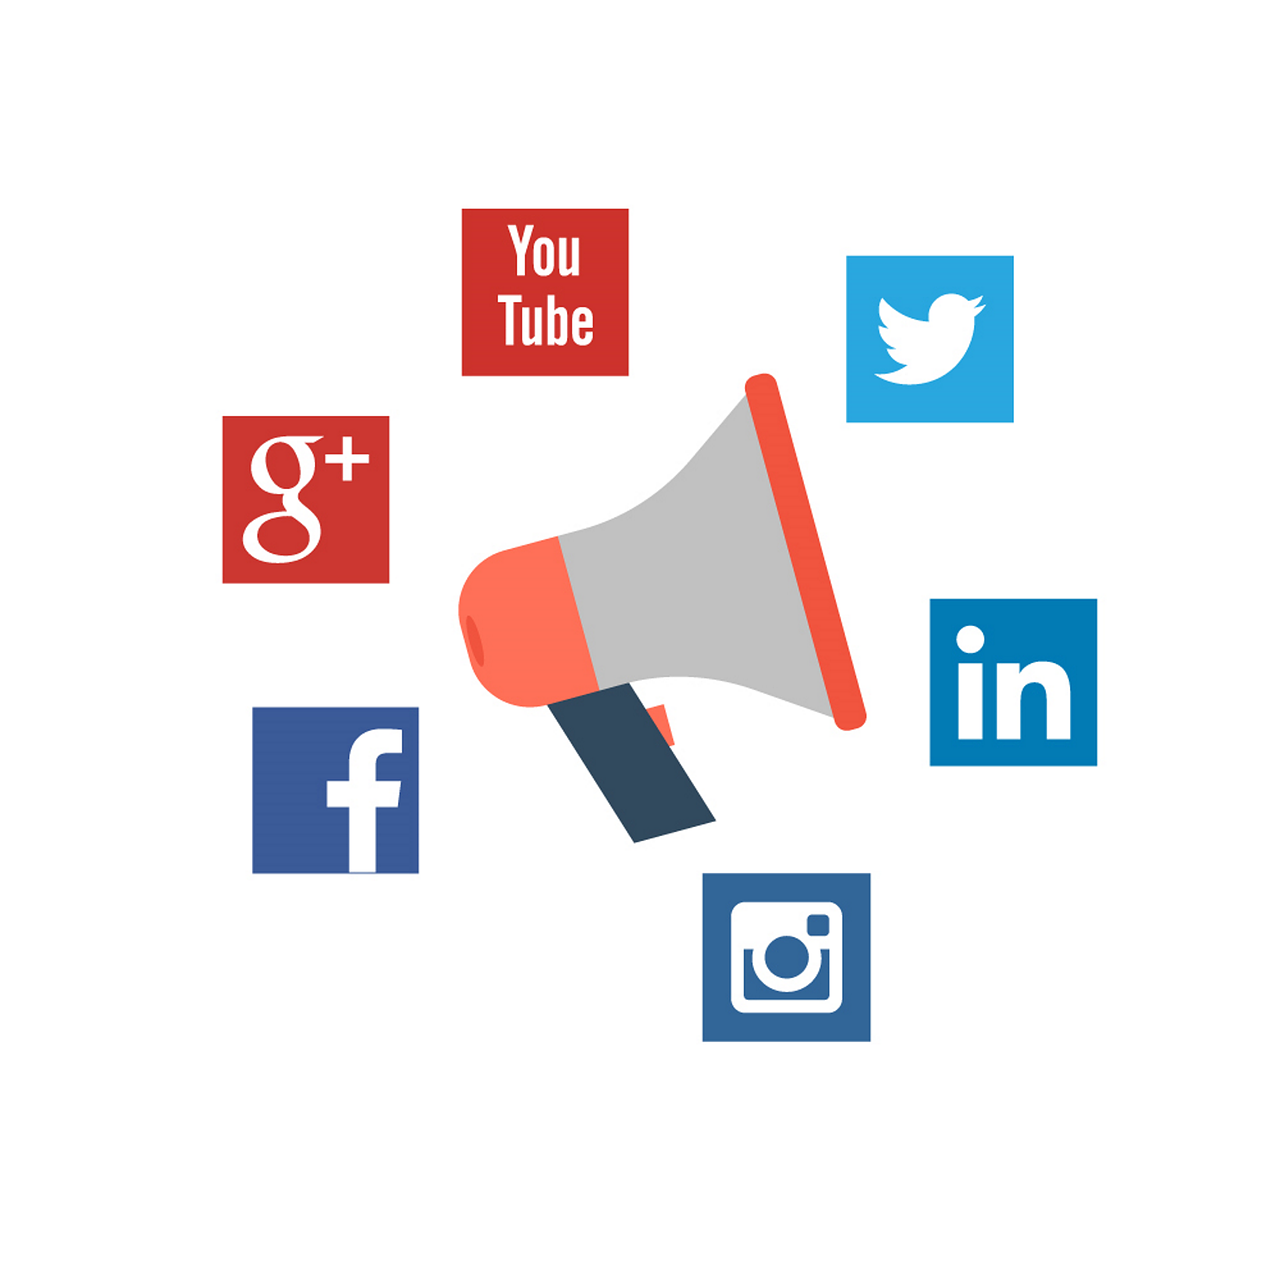 Tino9n social media marketing services